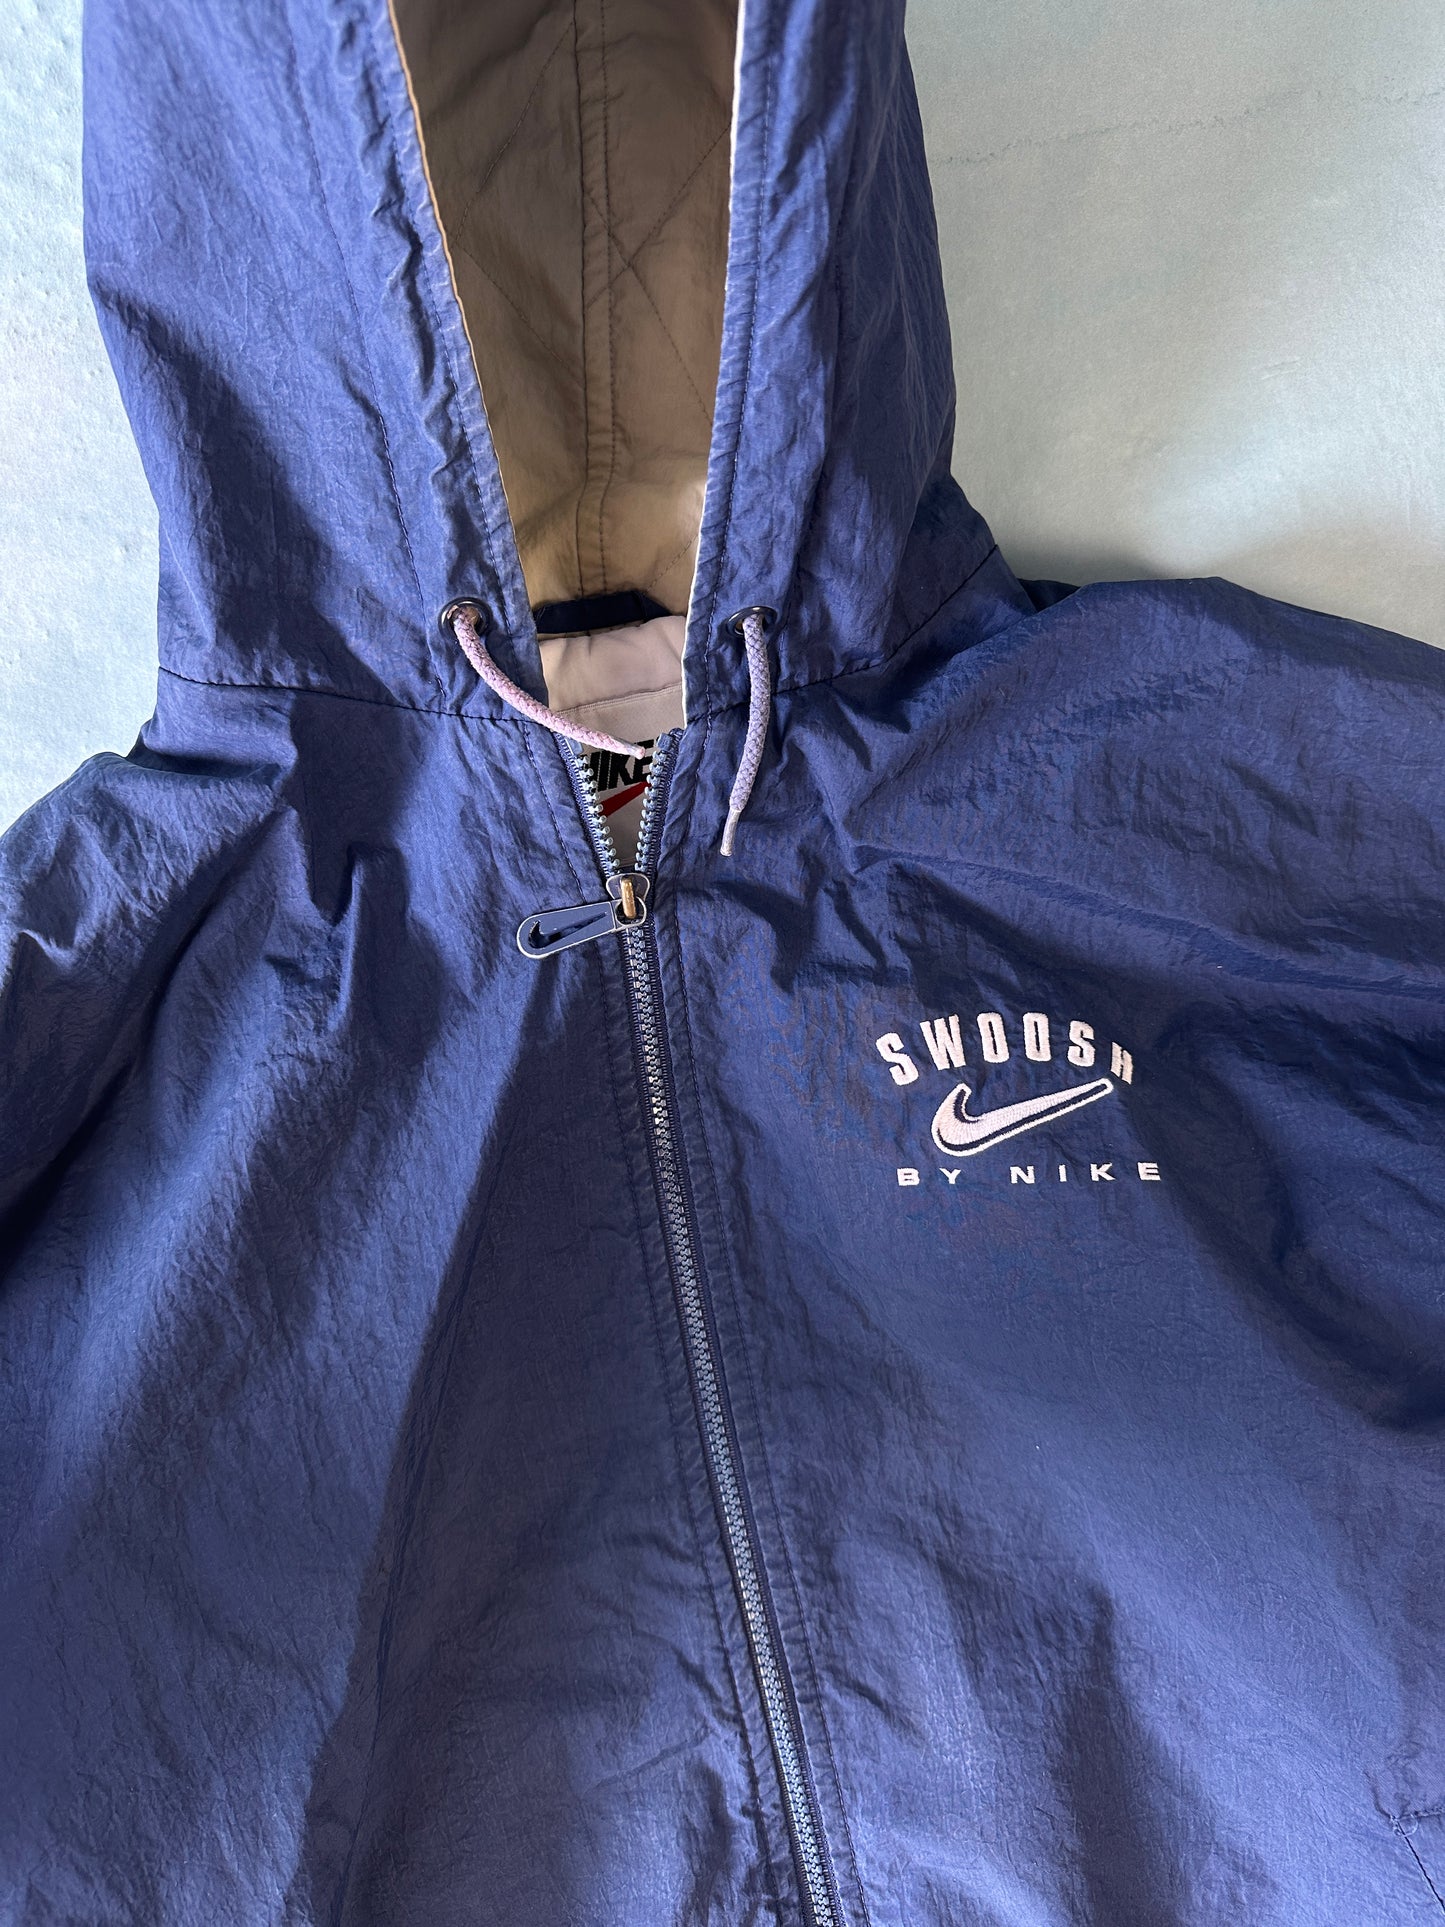 Nike Swoosh Vintage Jacket - L